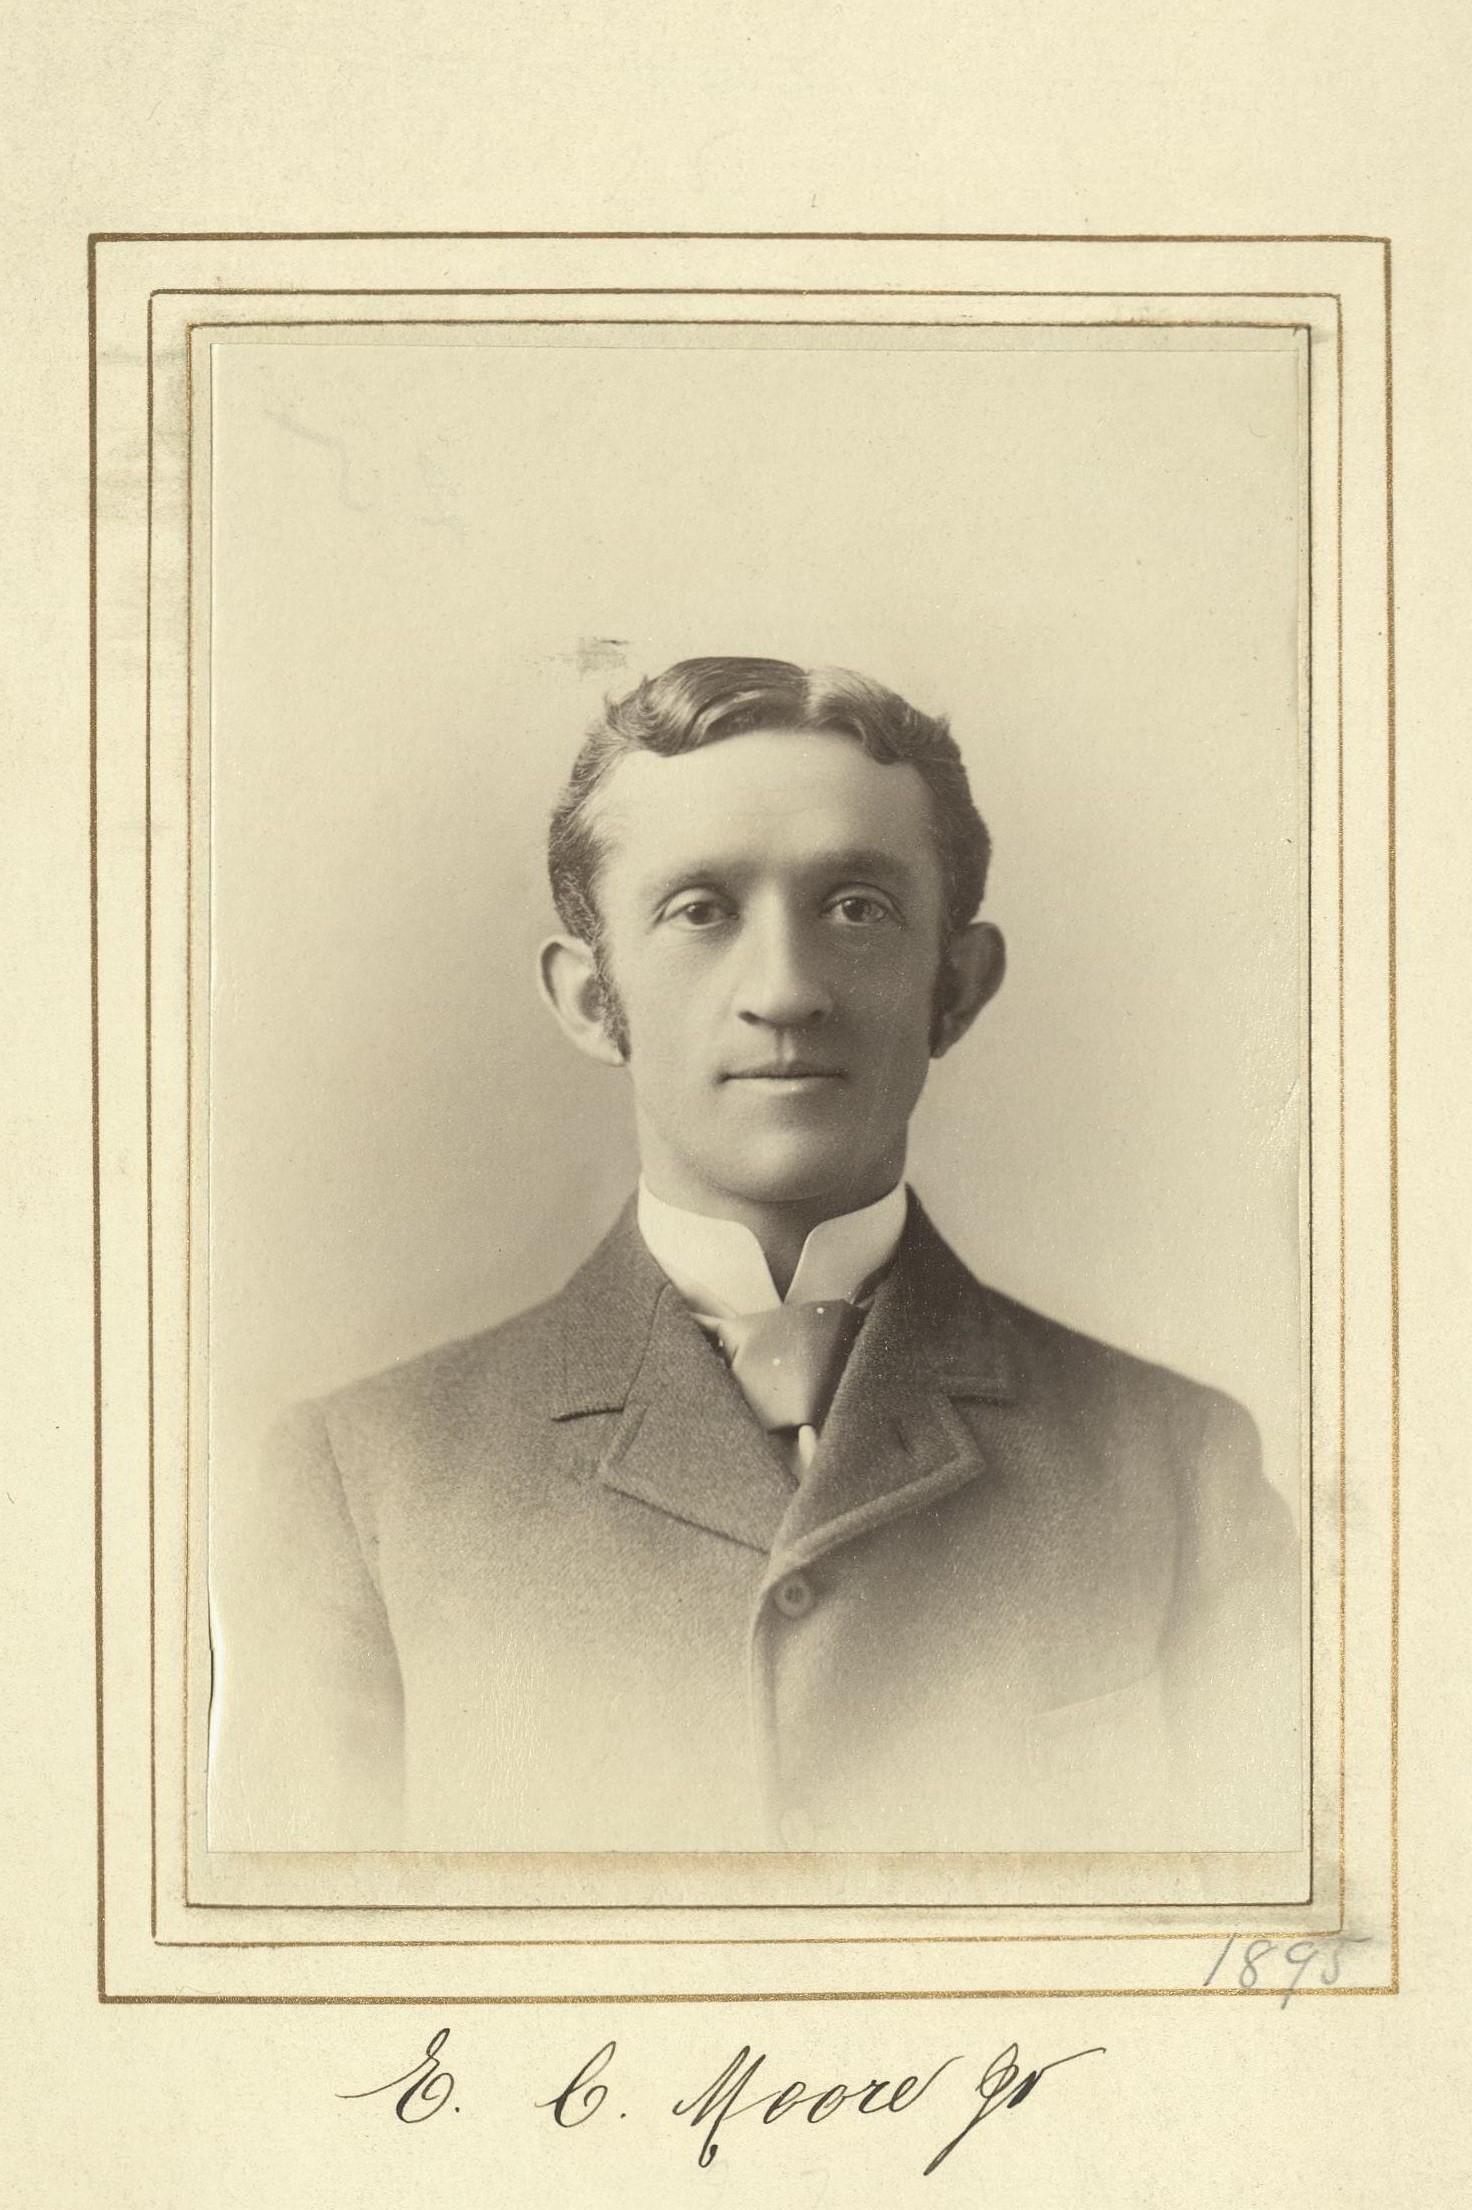 Member portrait of Edward C. Moore Jr.